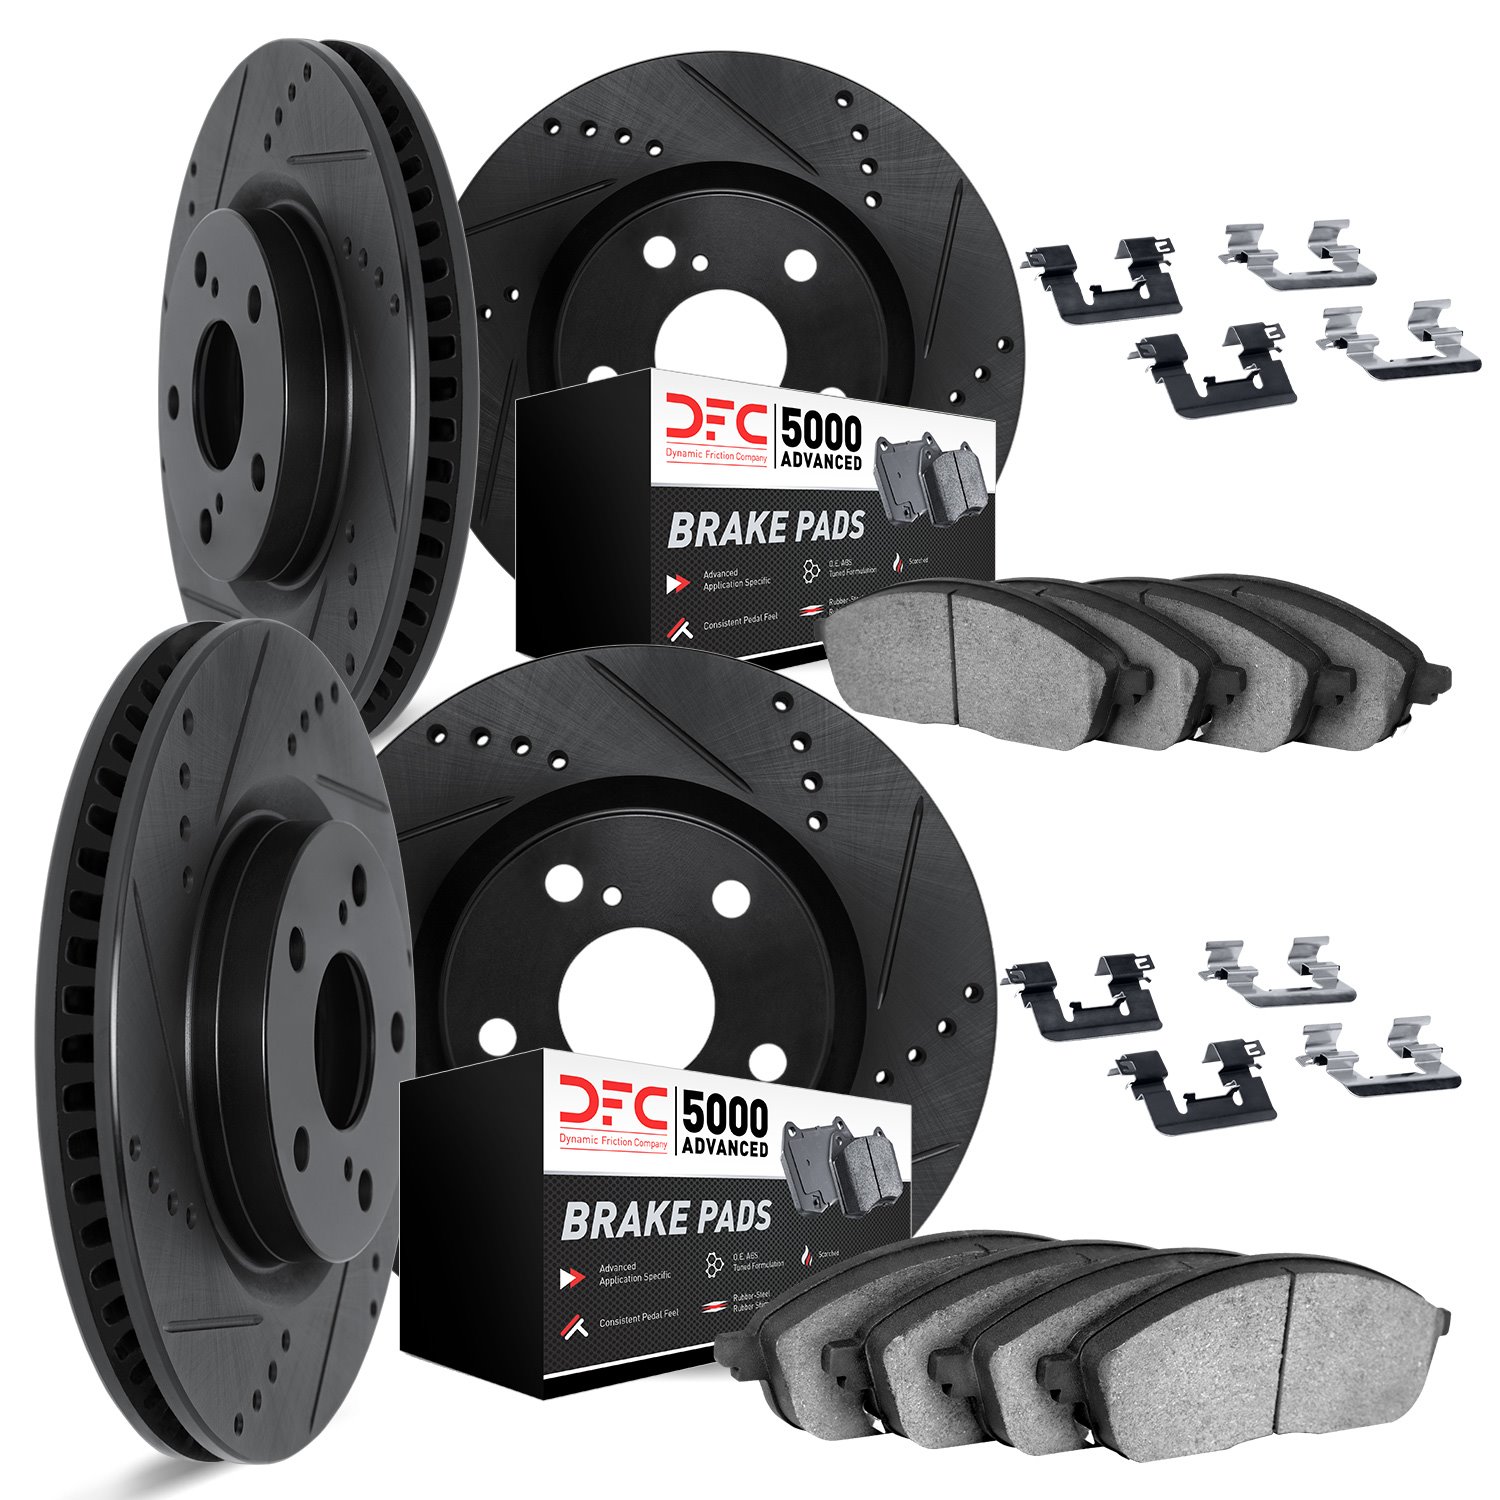 8514-20018 Drilled/Slotted Brake Rotors w/5000 Advanced Brake Pads Kit & Hardware [Black], 2017-2020 Multiple Makes/Models, Posi